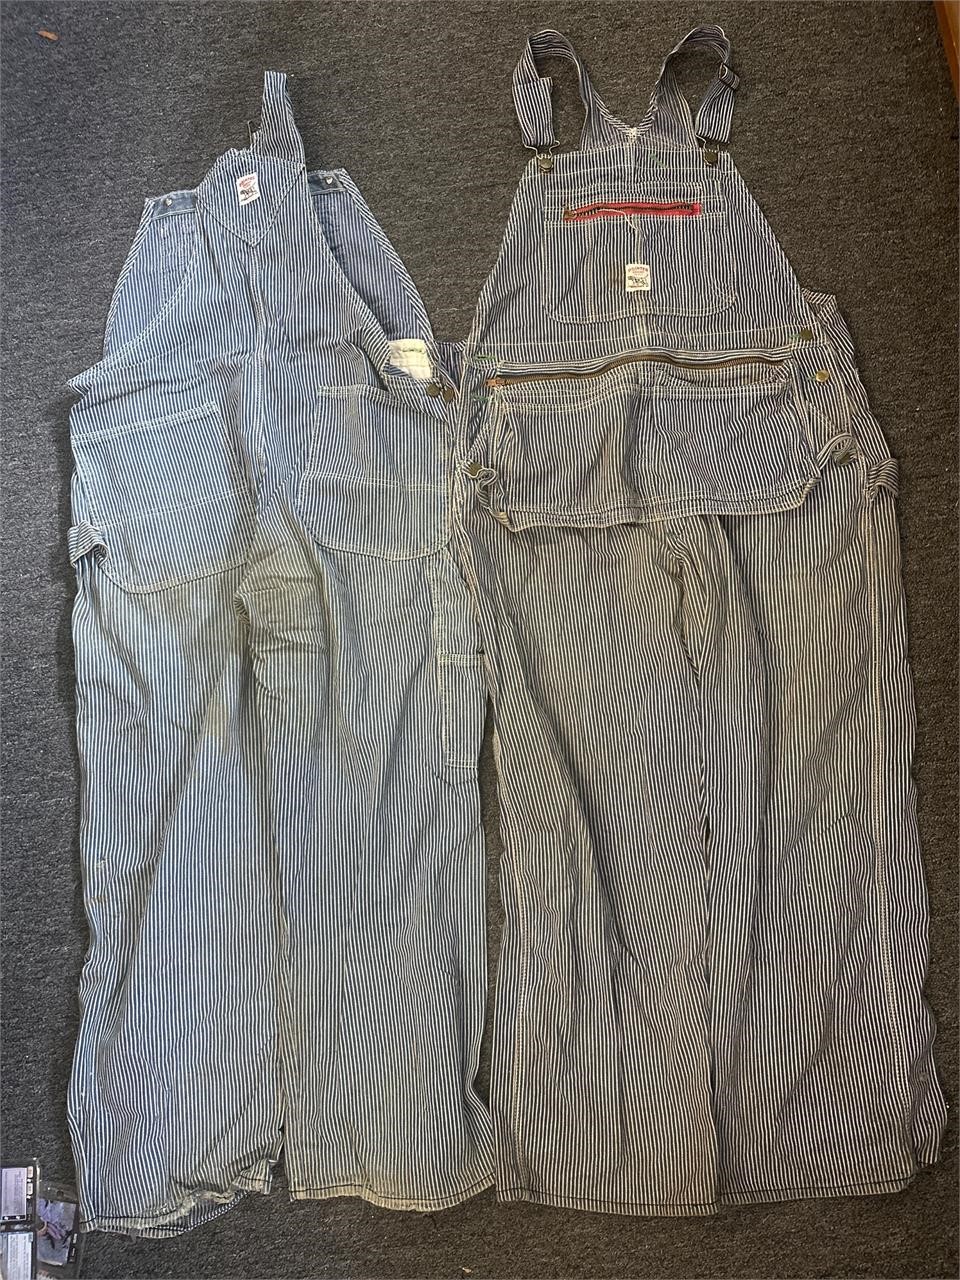 Vintage pointer brand overalls